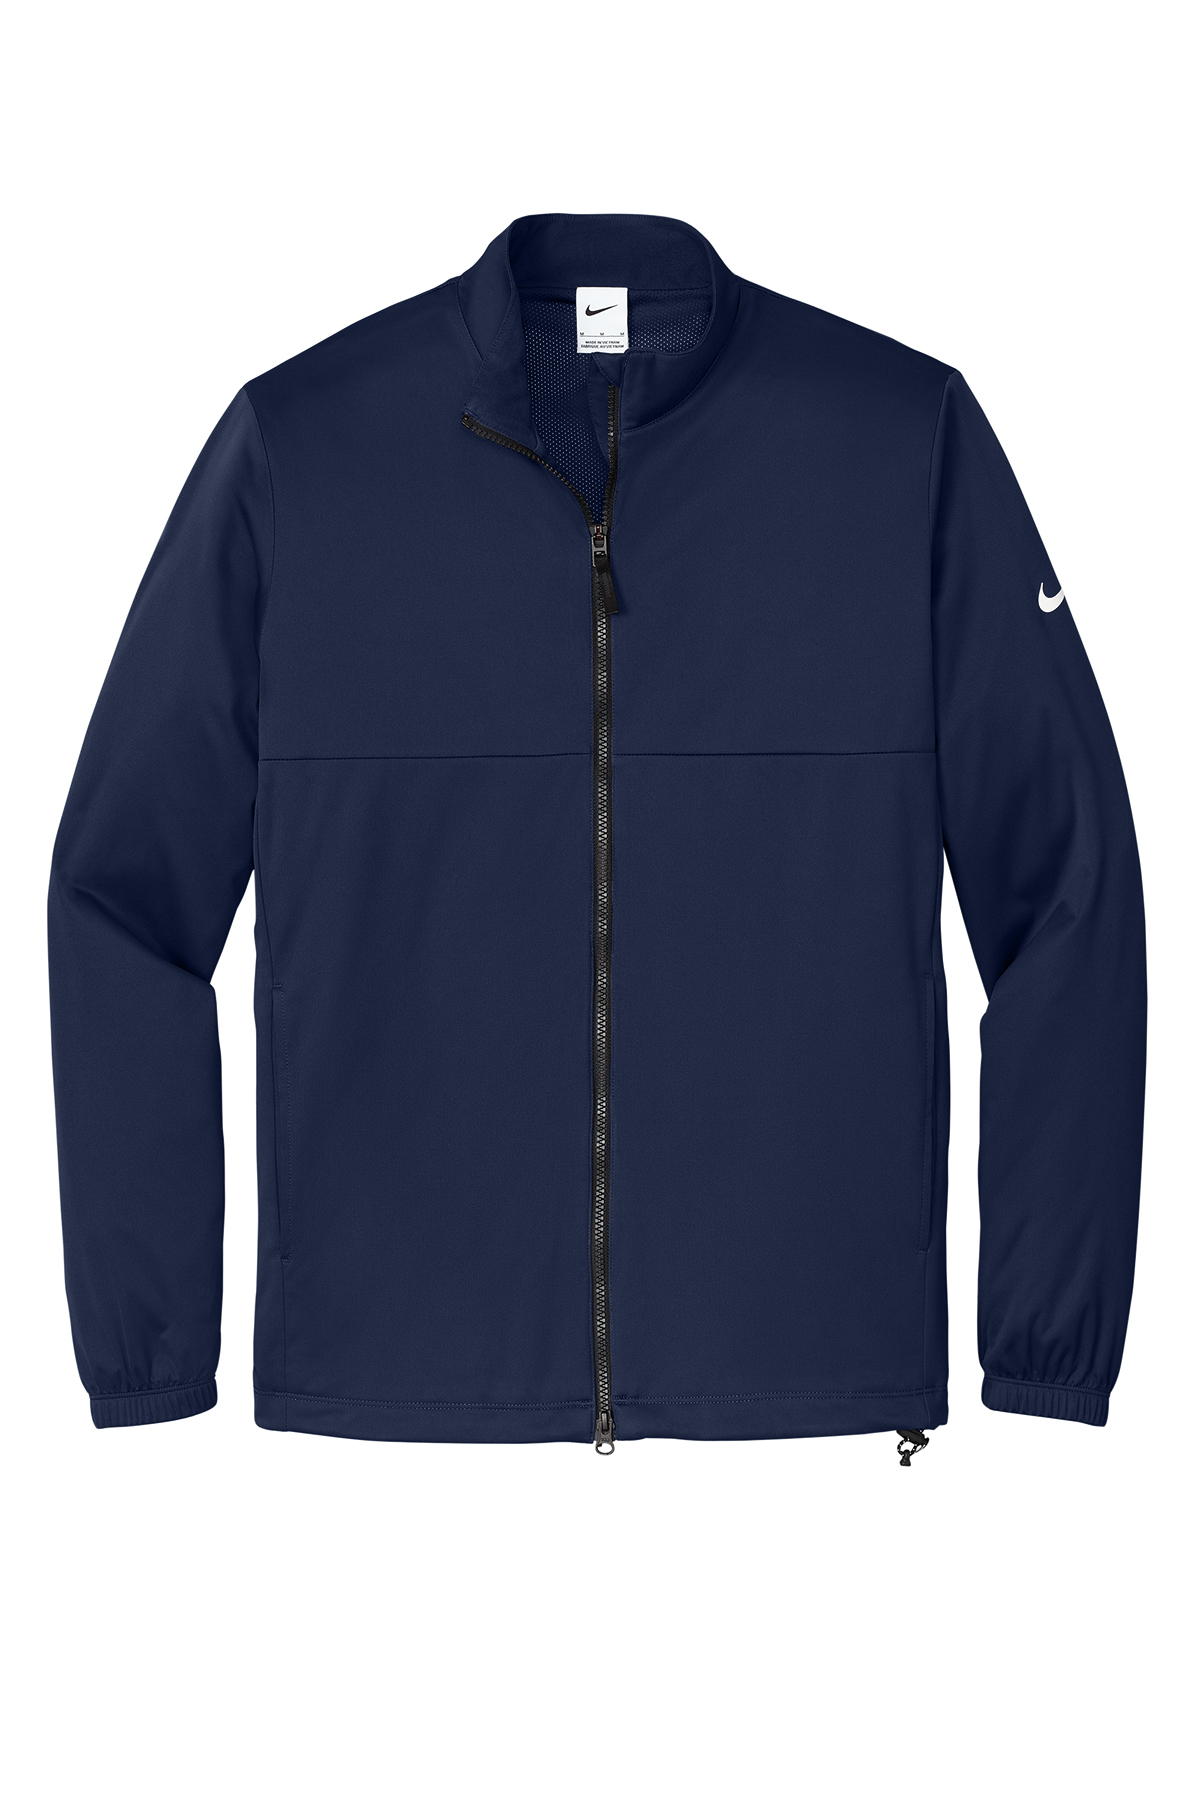 Nike Storm-FIT Full-Zip Jacket | Product | SanMar